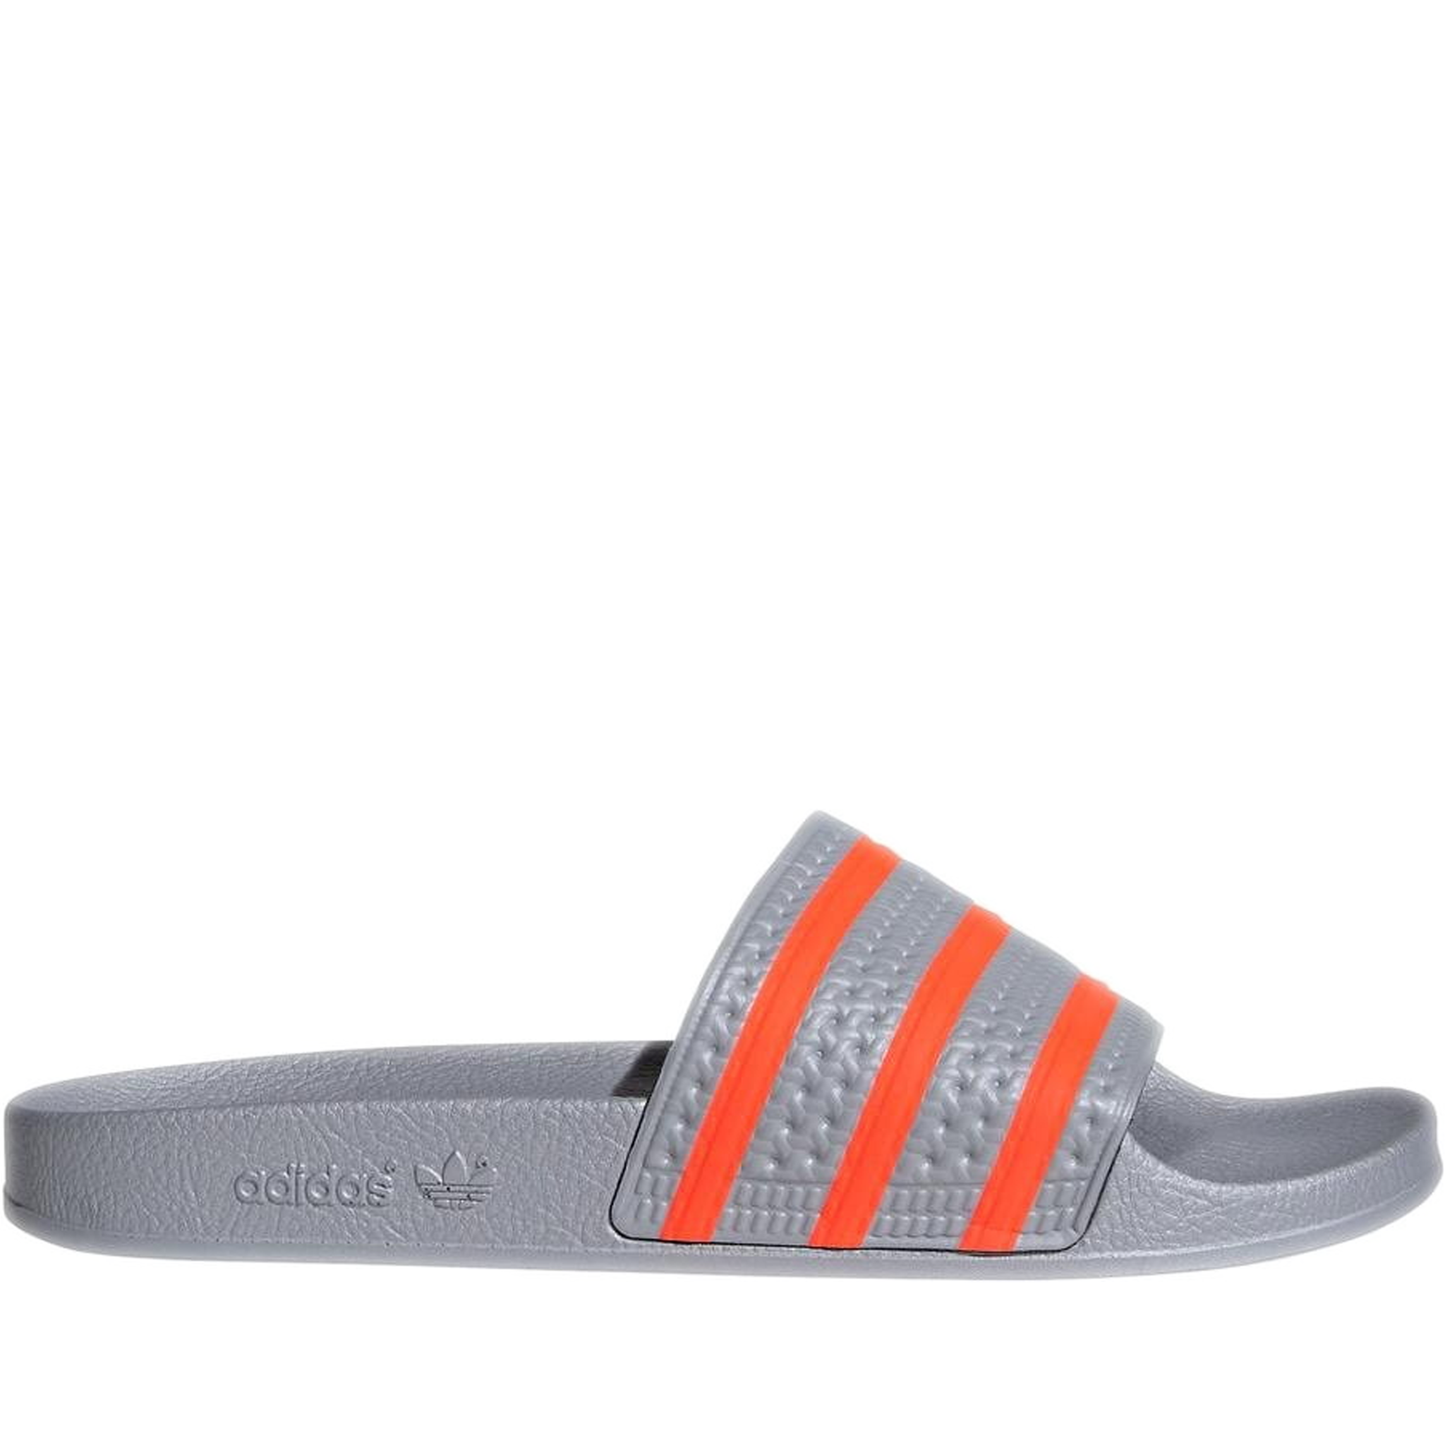 Men's Adidas Adilette Halo Slides - Silver/ Orange